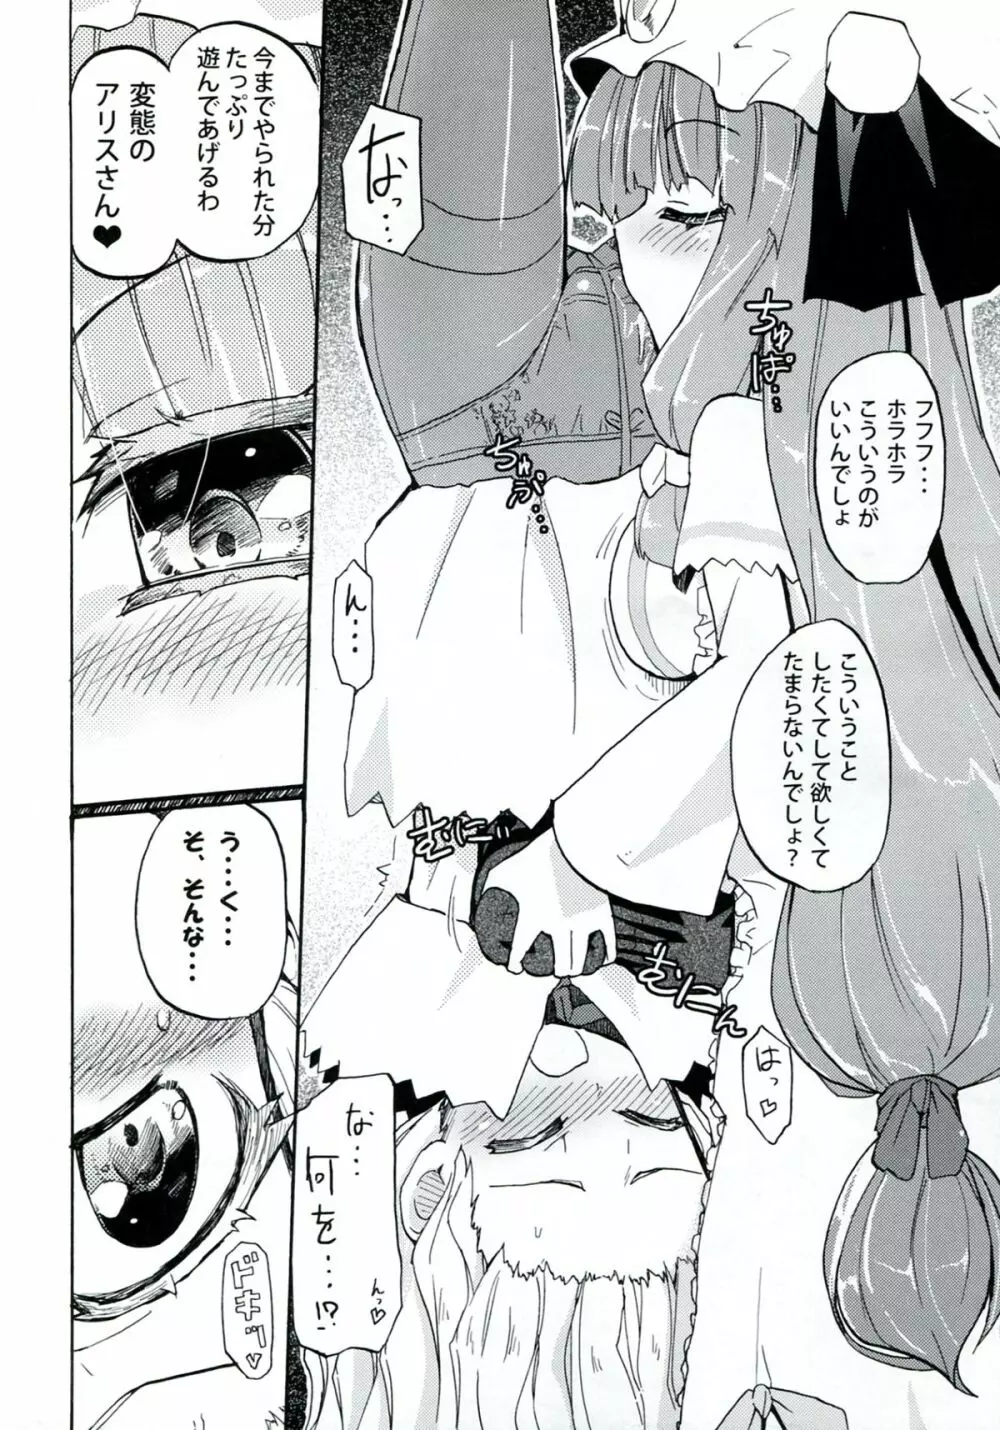 Homuraya Milk ★ Collection 2 - page14